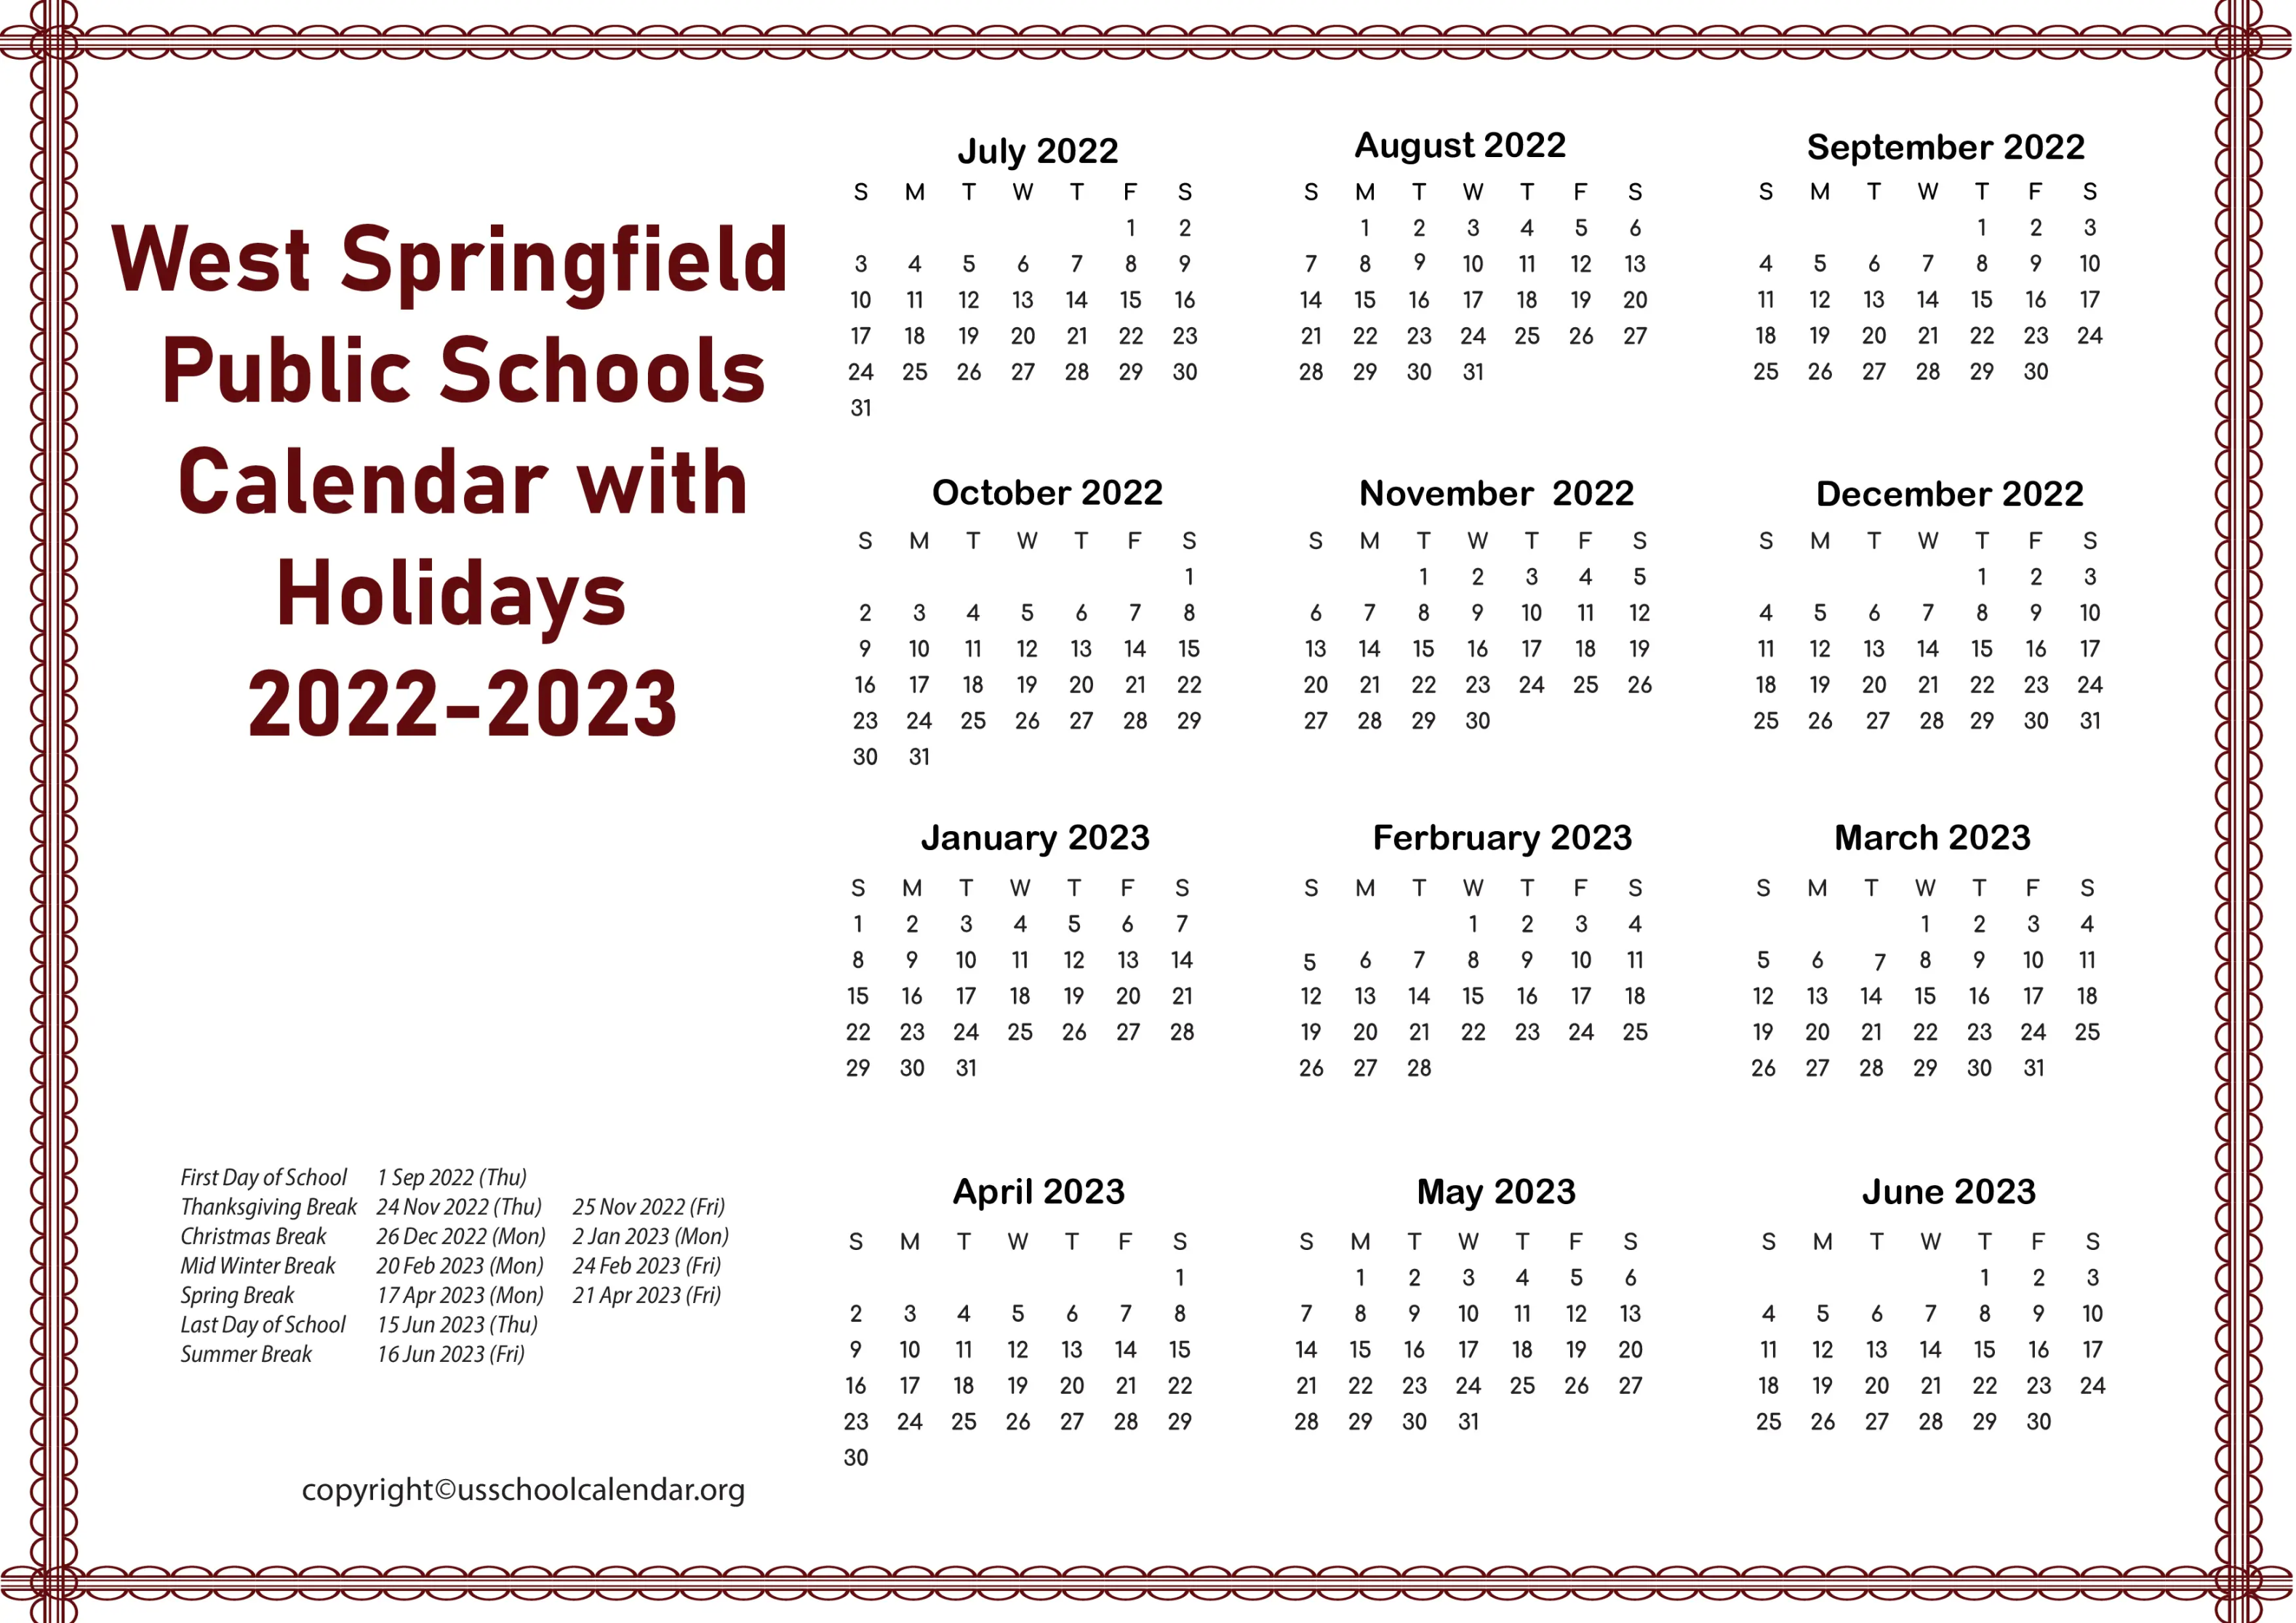 WSPS] West Springfield Public Schools Calendar for -